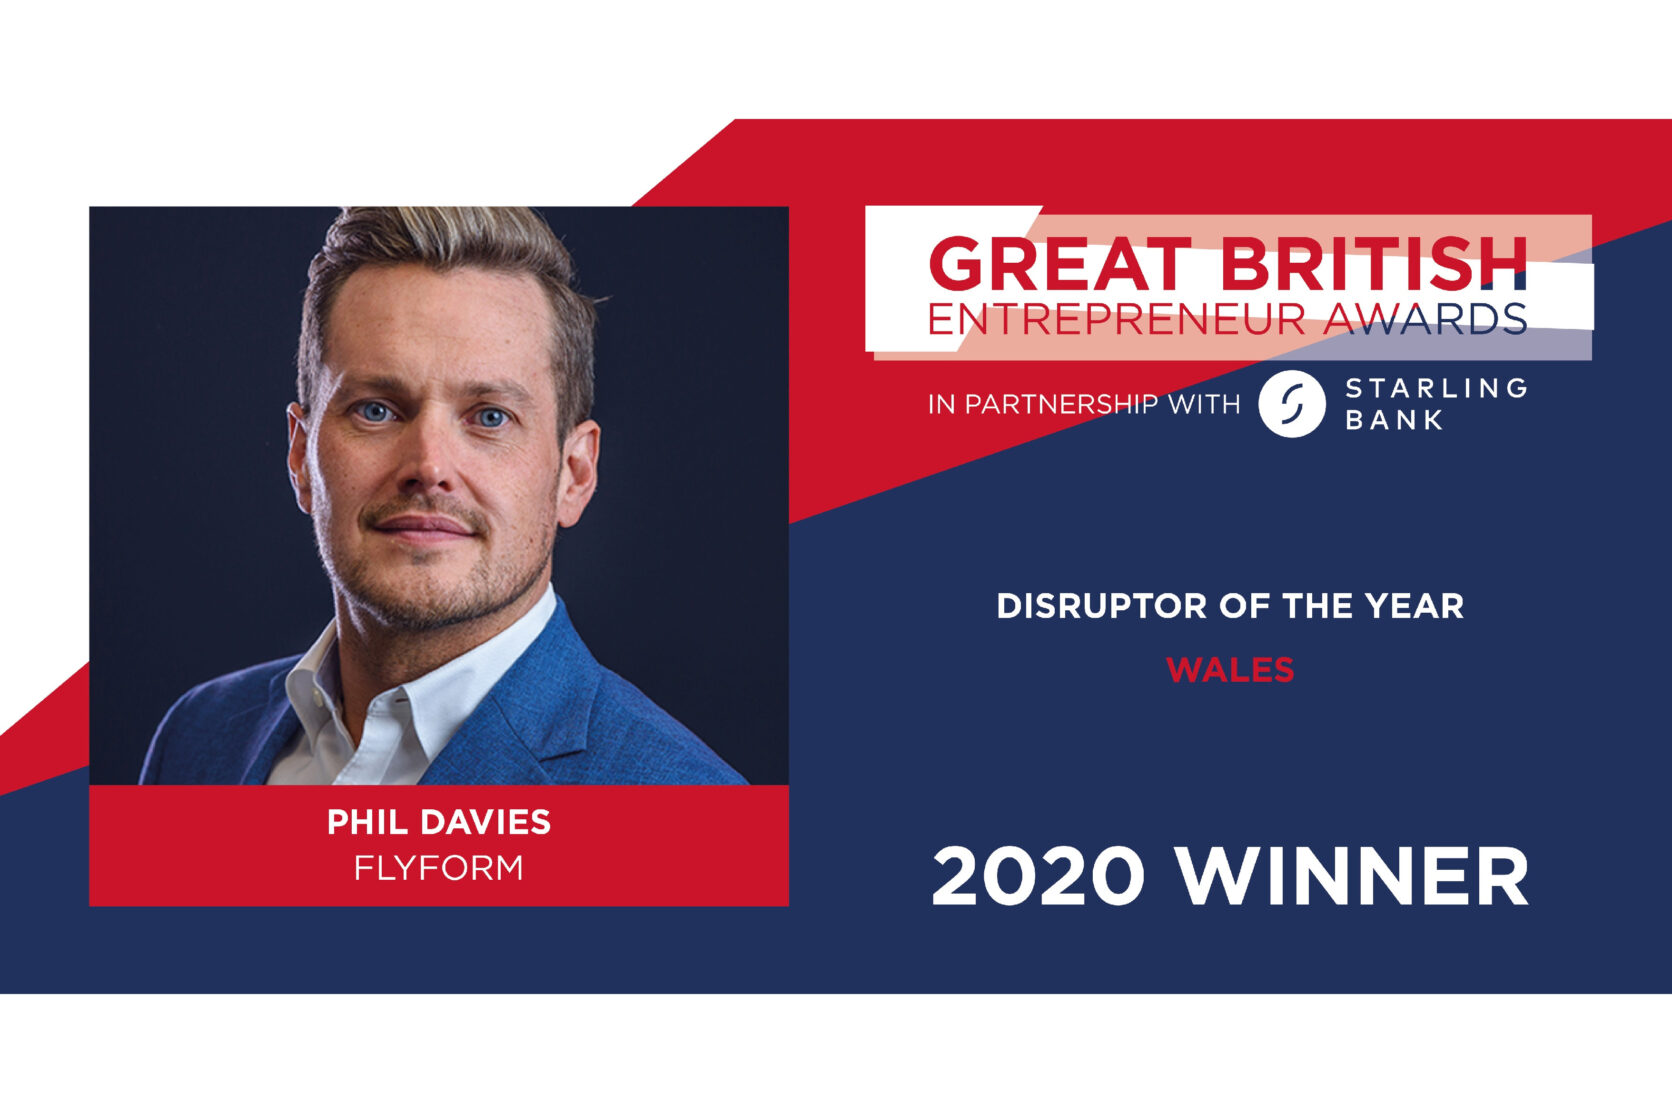 Great British Entrepreneur Awards banner recognising Phil Davies